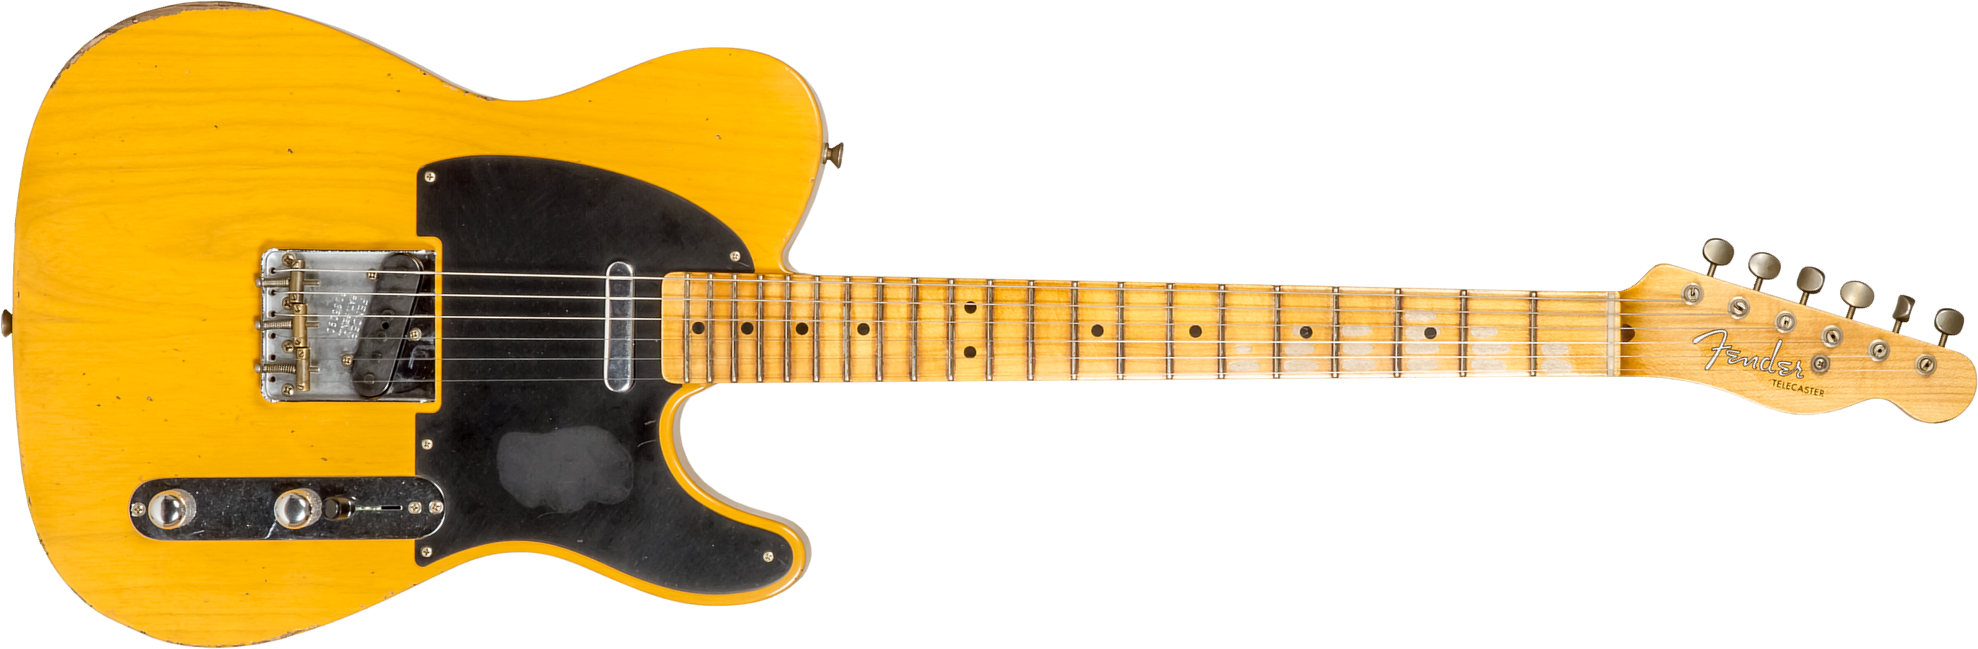 Fender Custom Shop Tele 1952 2s Ht Mn #r135090 - Relic Aged Butterscotch Blonde - Televorm elektrische gitaar - Main picture